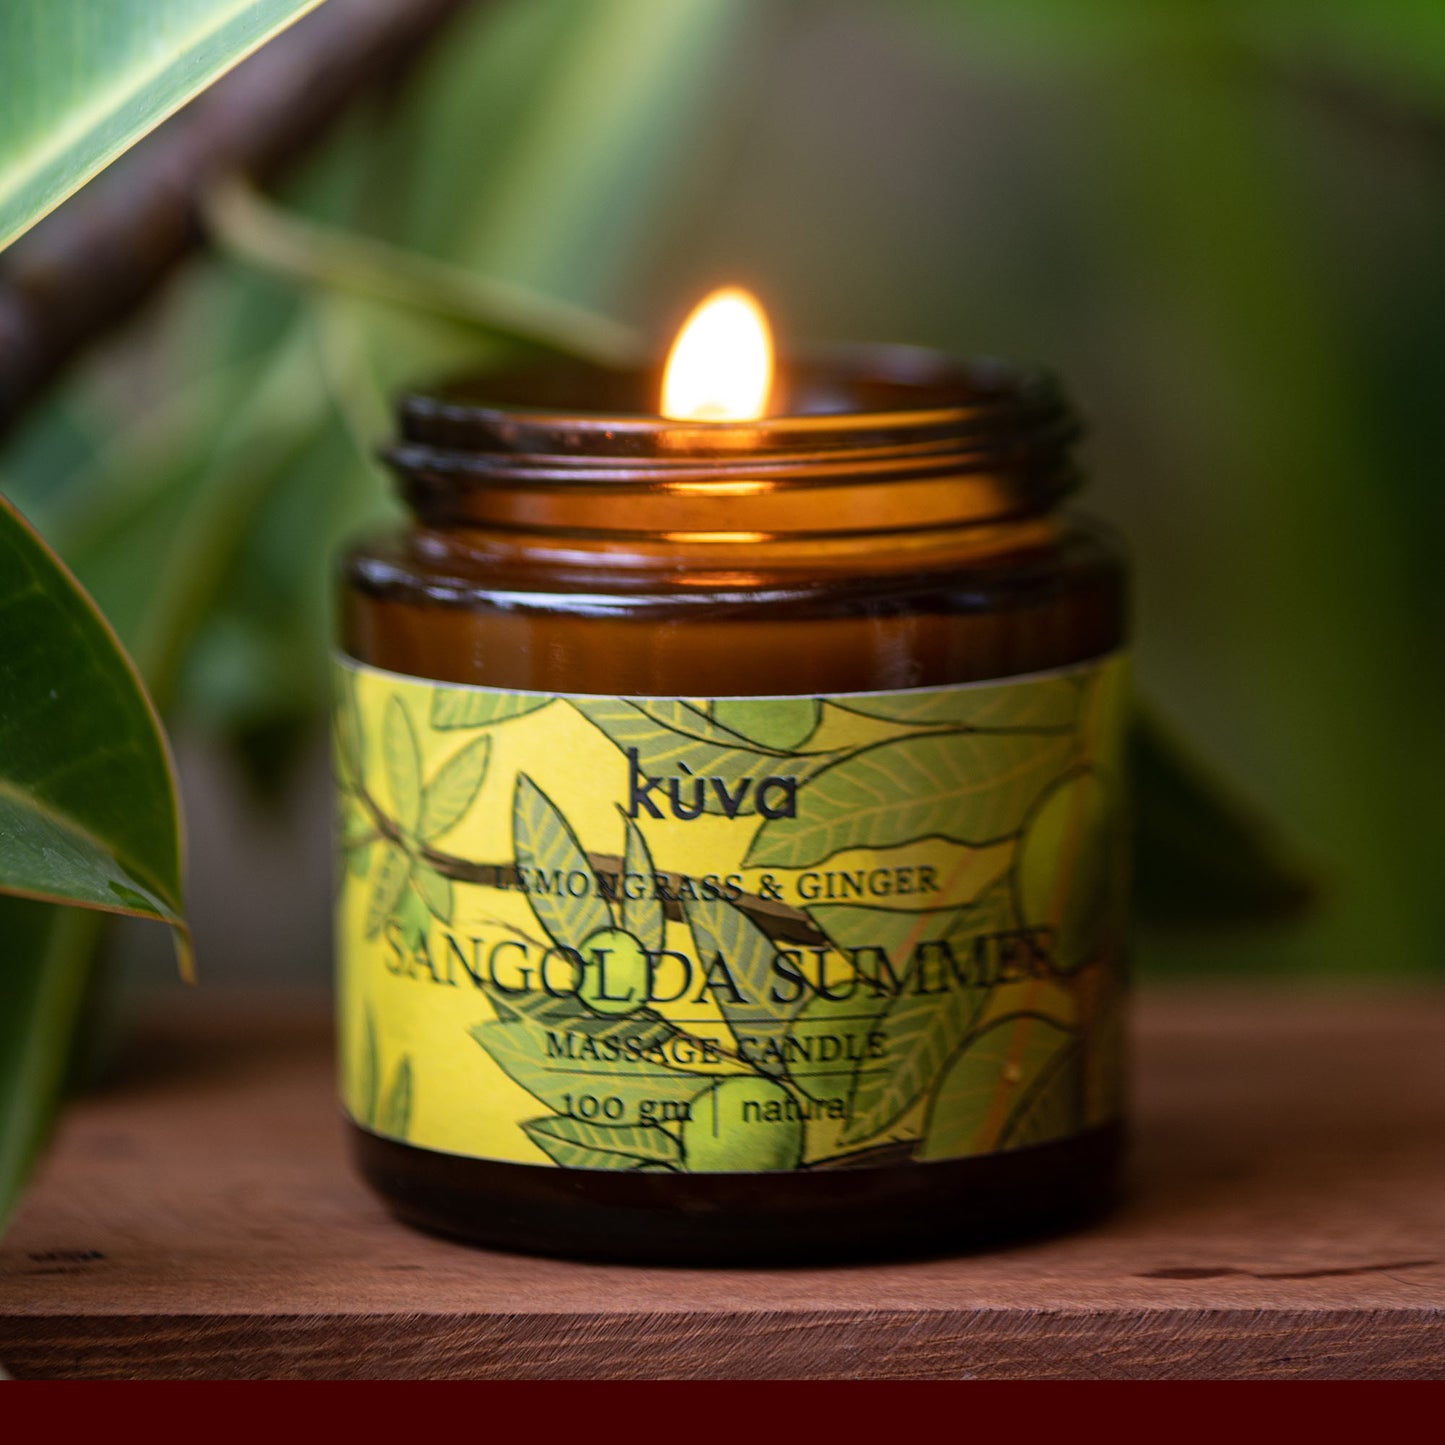 "Sangolda Summer" Body Massage Candle | Lemongrass & Ginger | Melt & Pour